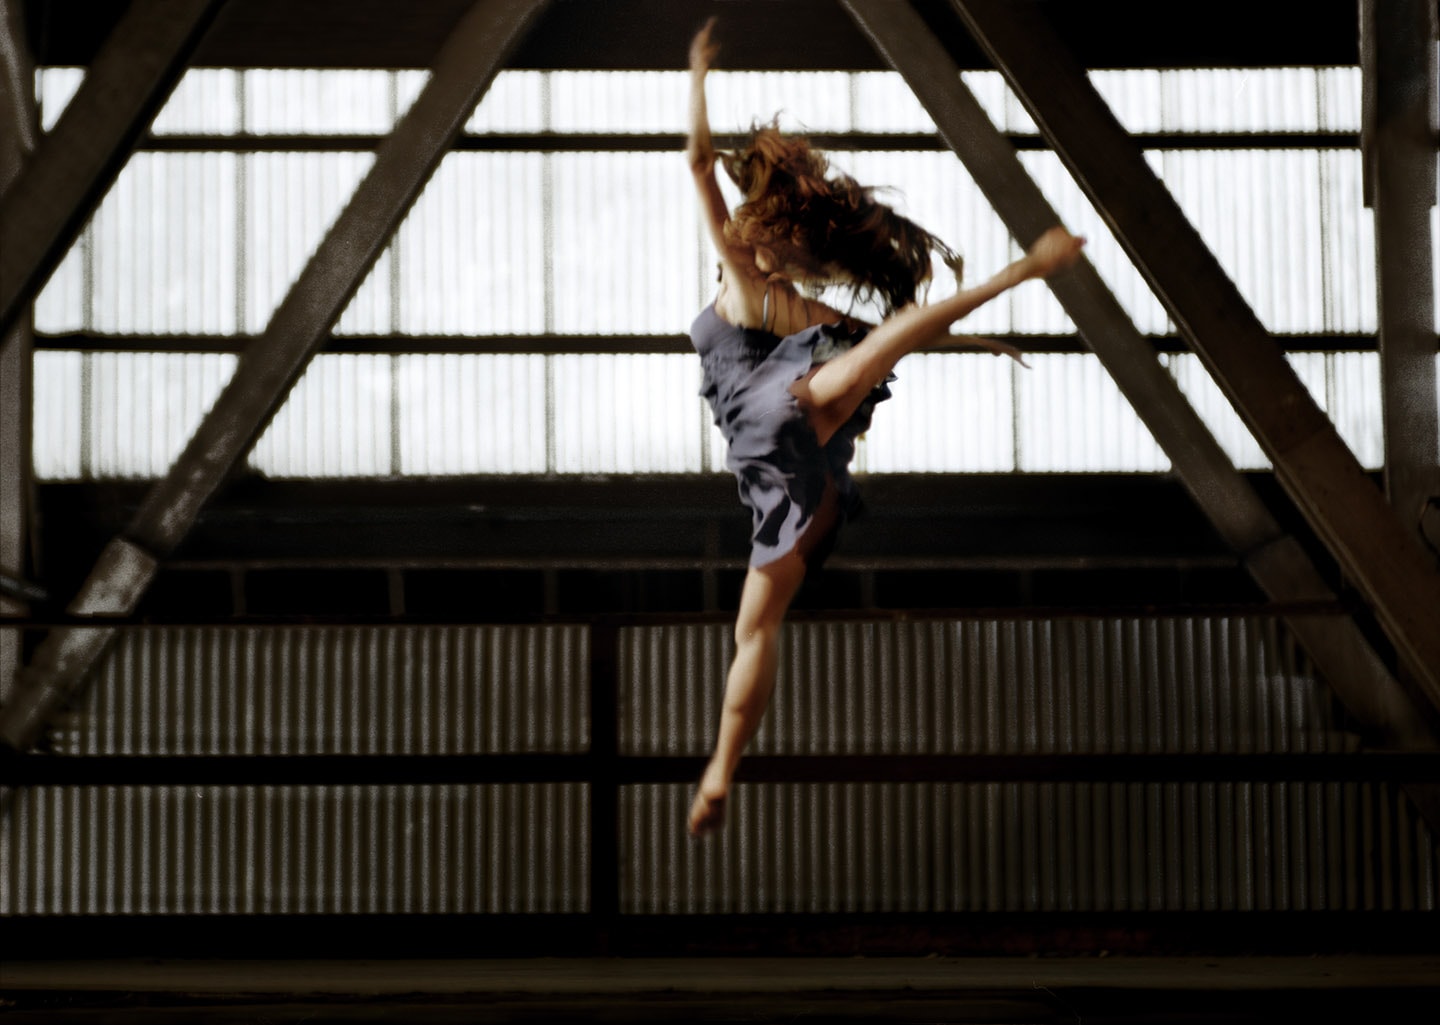 Dancer In Blue Blurred Profile Image Arabesque Jump Leg Raised Mid Air